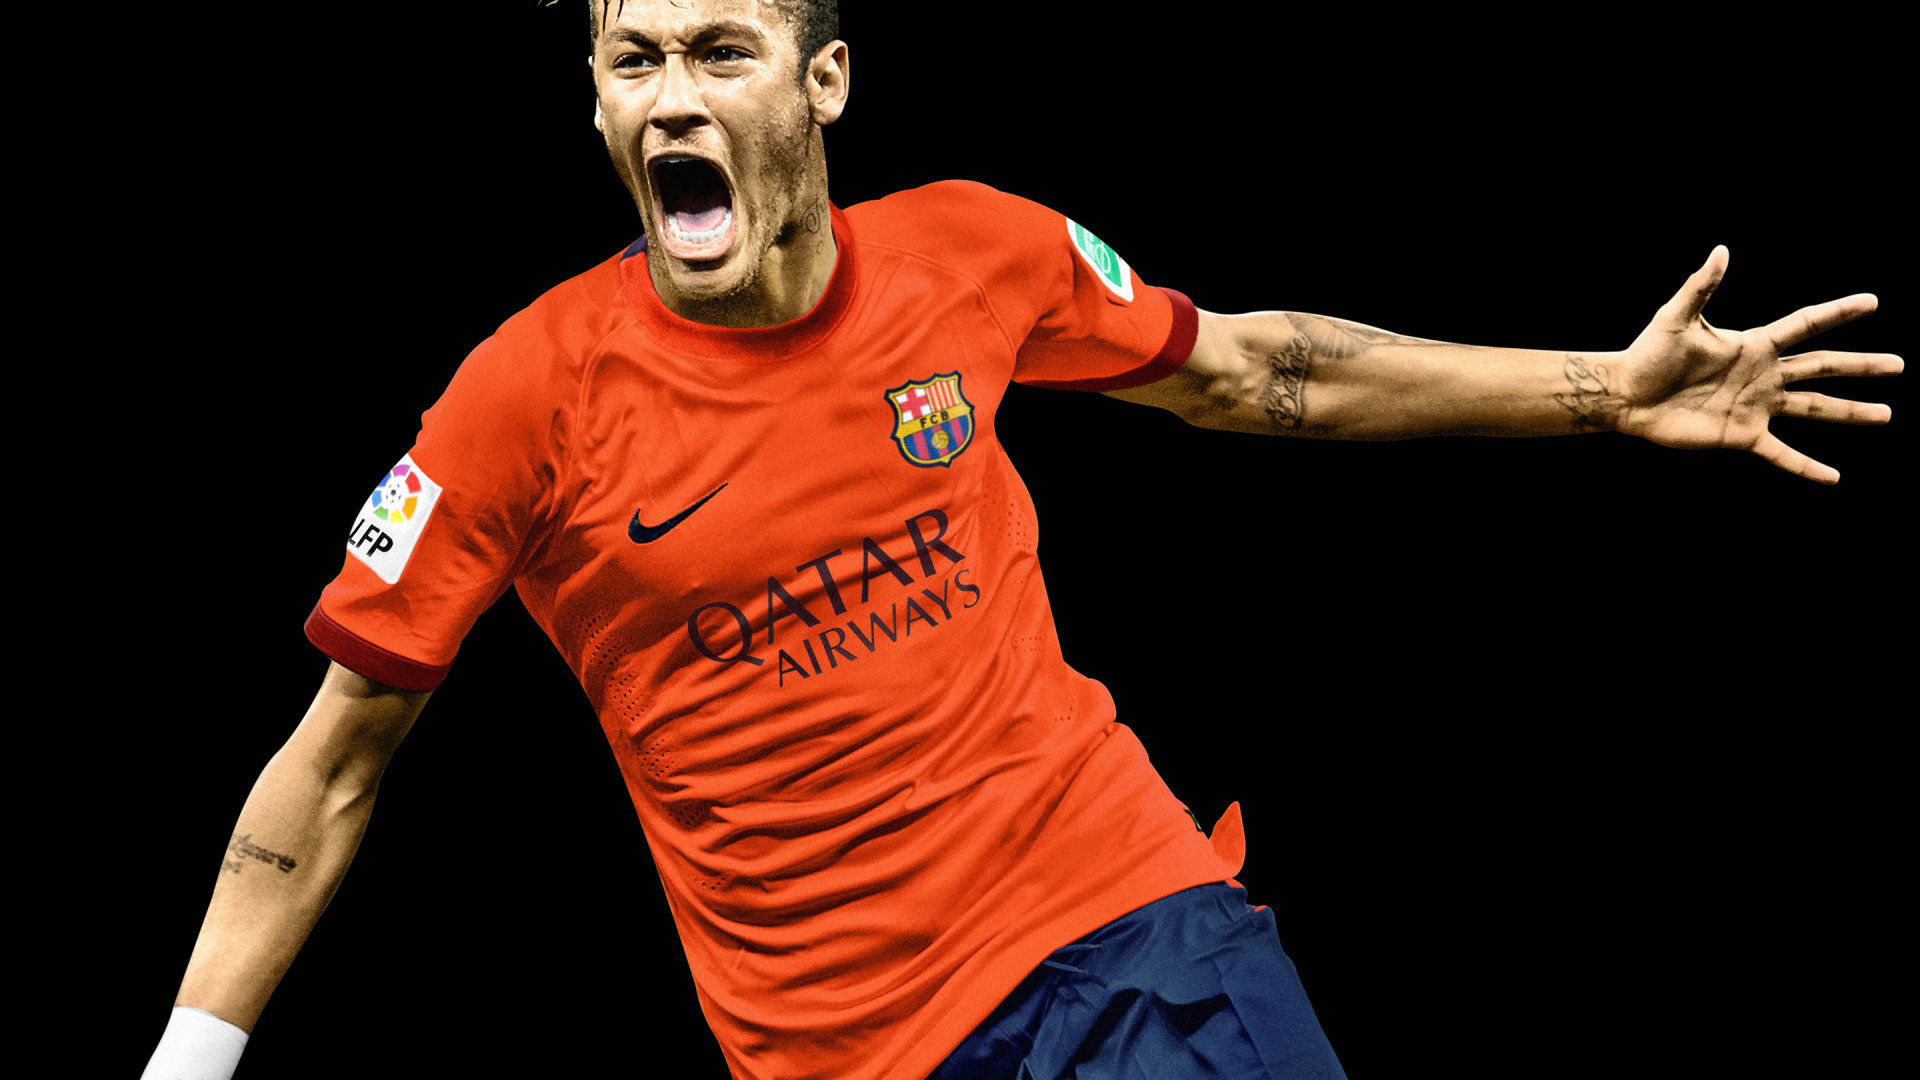 Neymar-screaming-wallpaper-2015-1920x1080